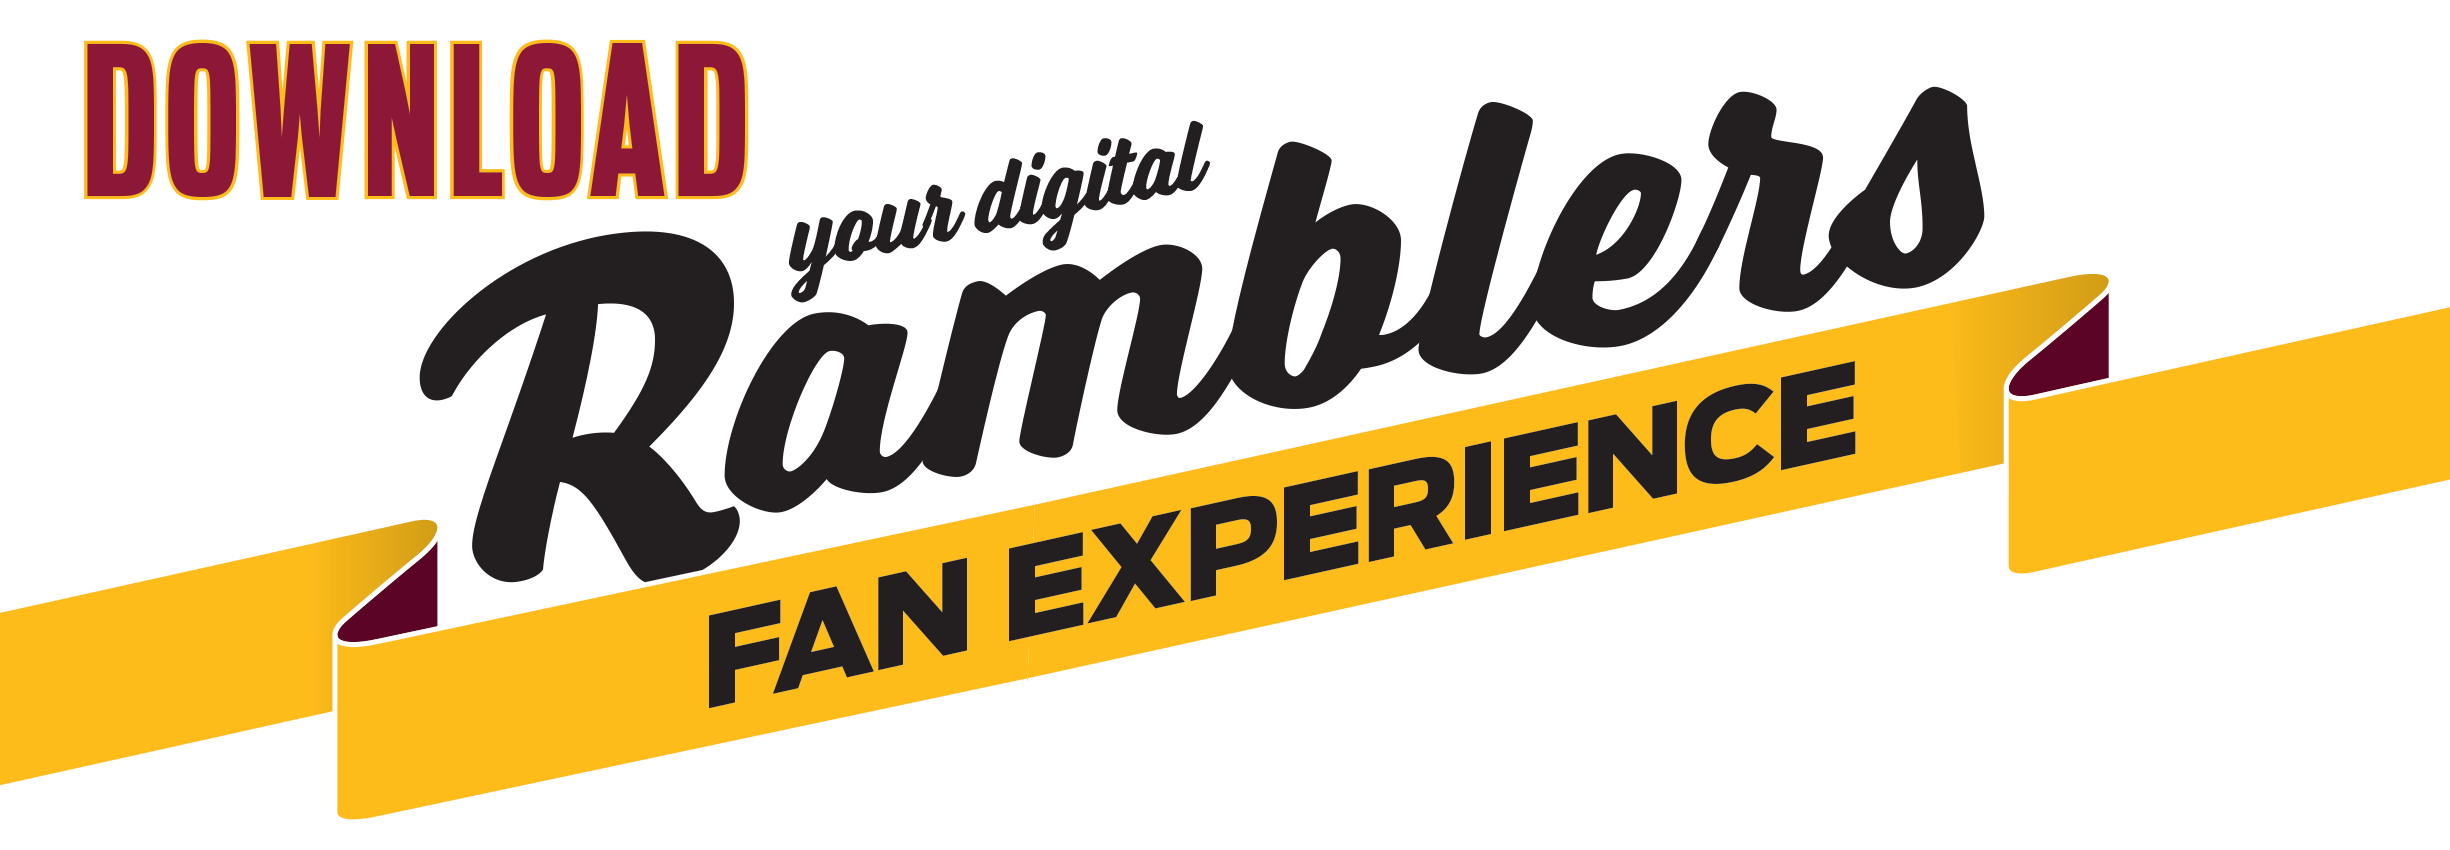 Download your digital Ramblers Fan Experience